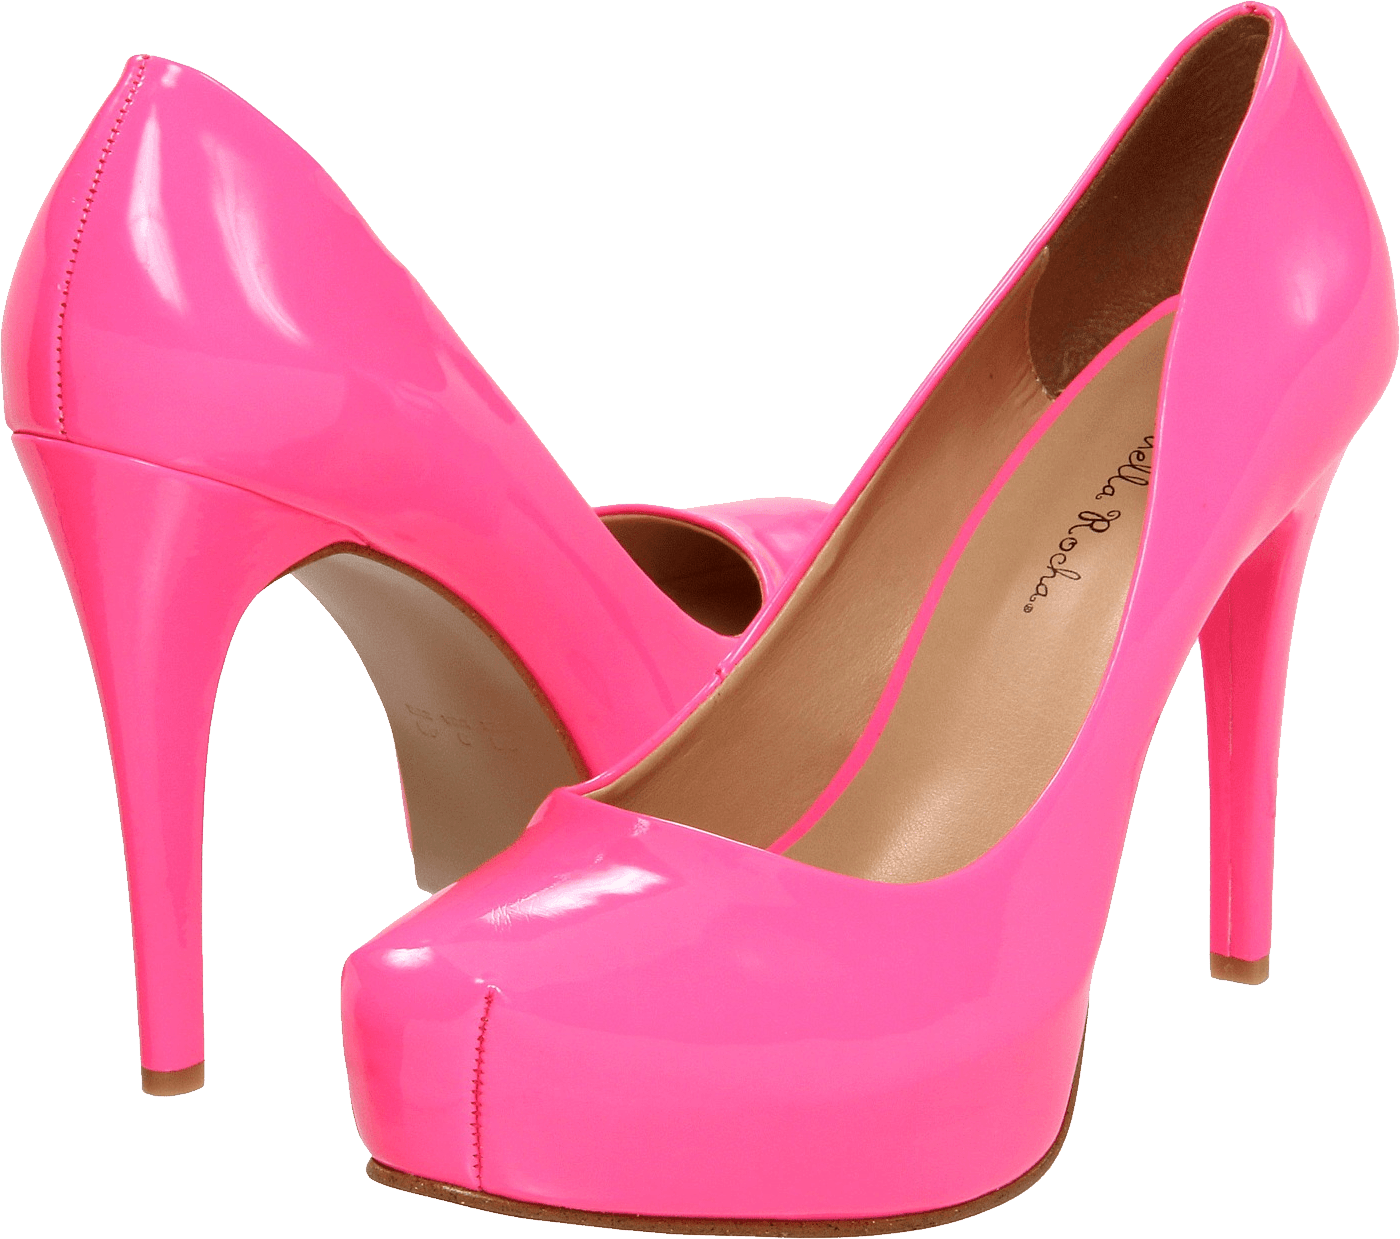 Pink High Heels Shoe Download Free Image PNG Image